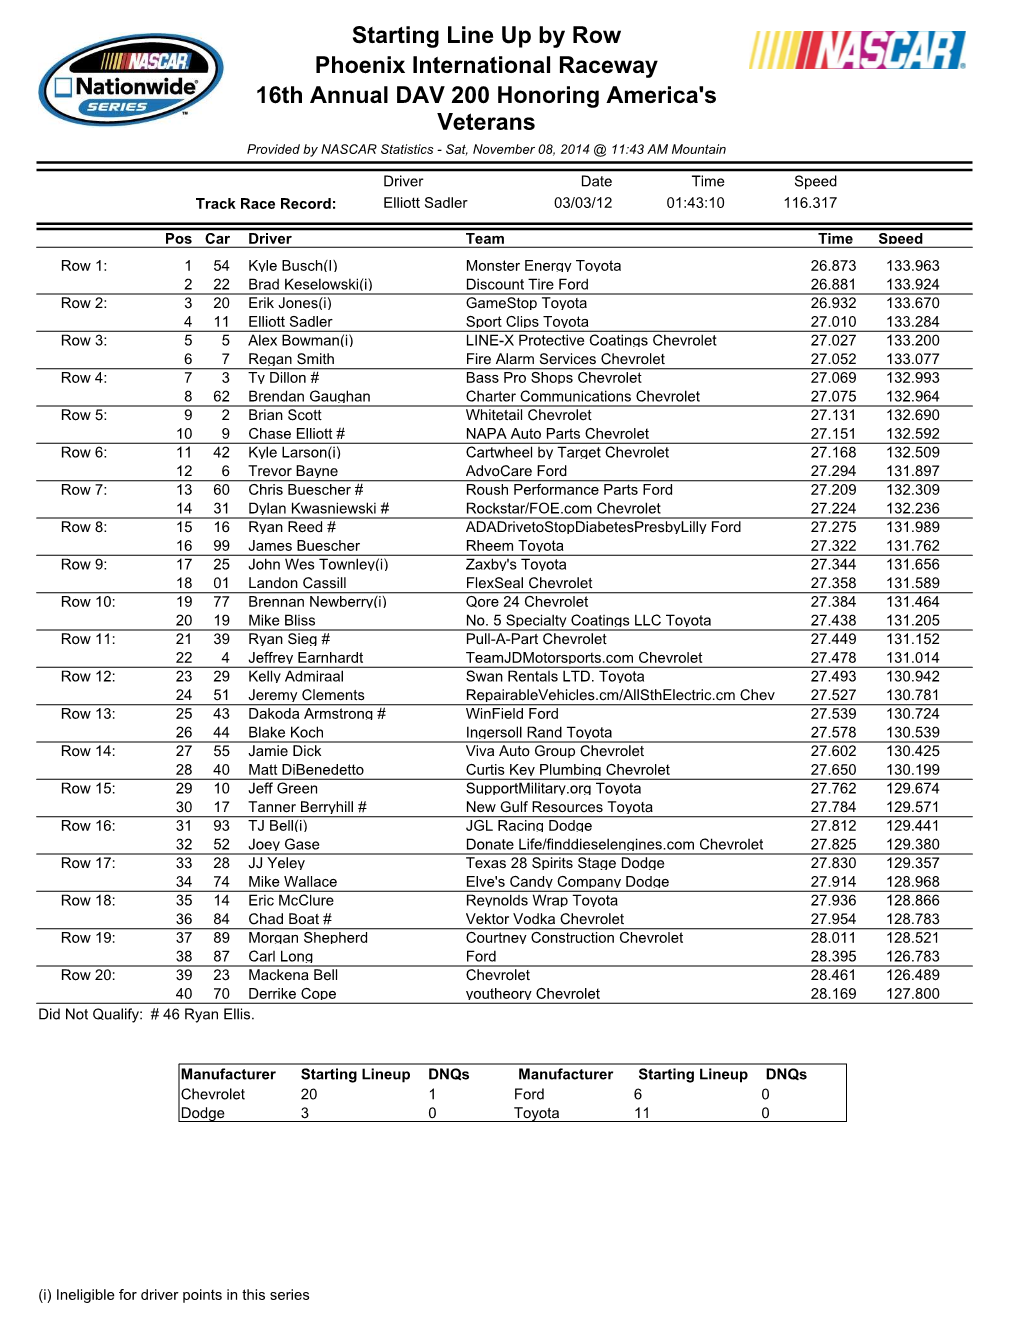 Starting Line up by Row Phoenix International Raceway 16Th Annual